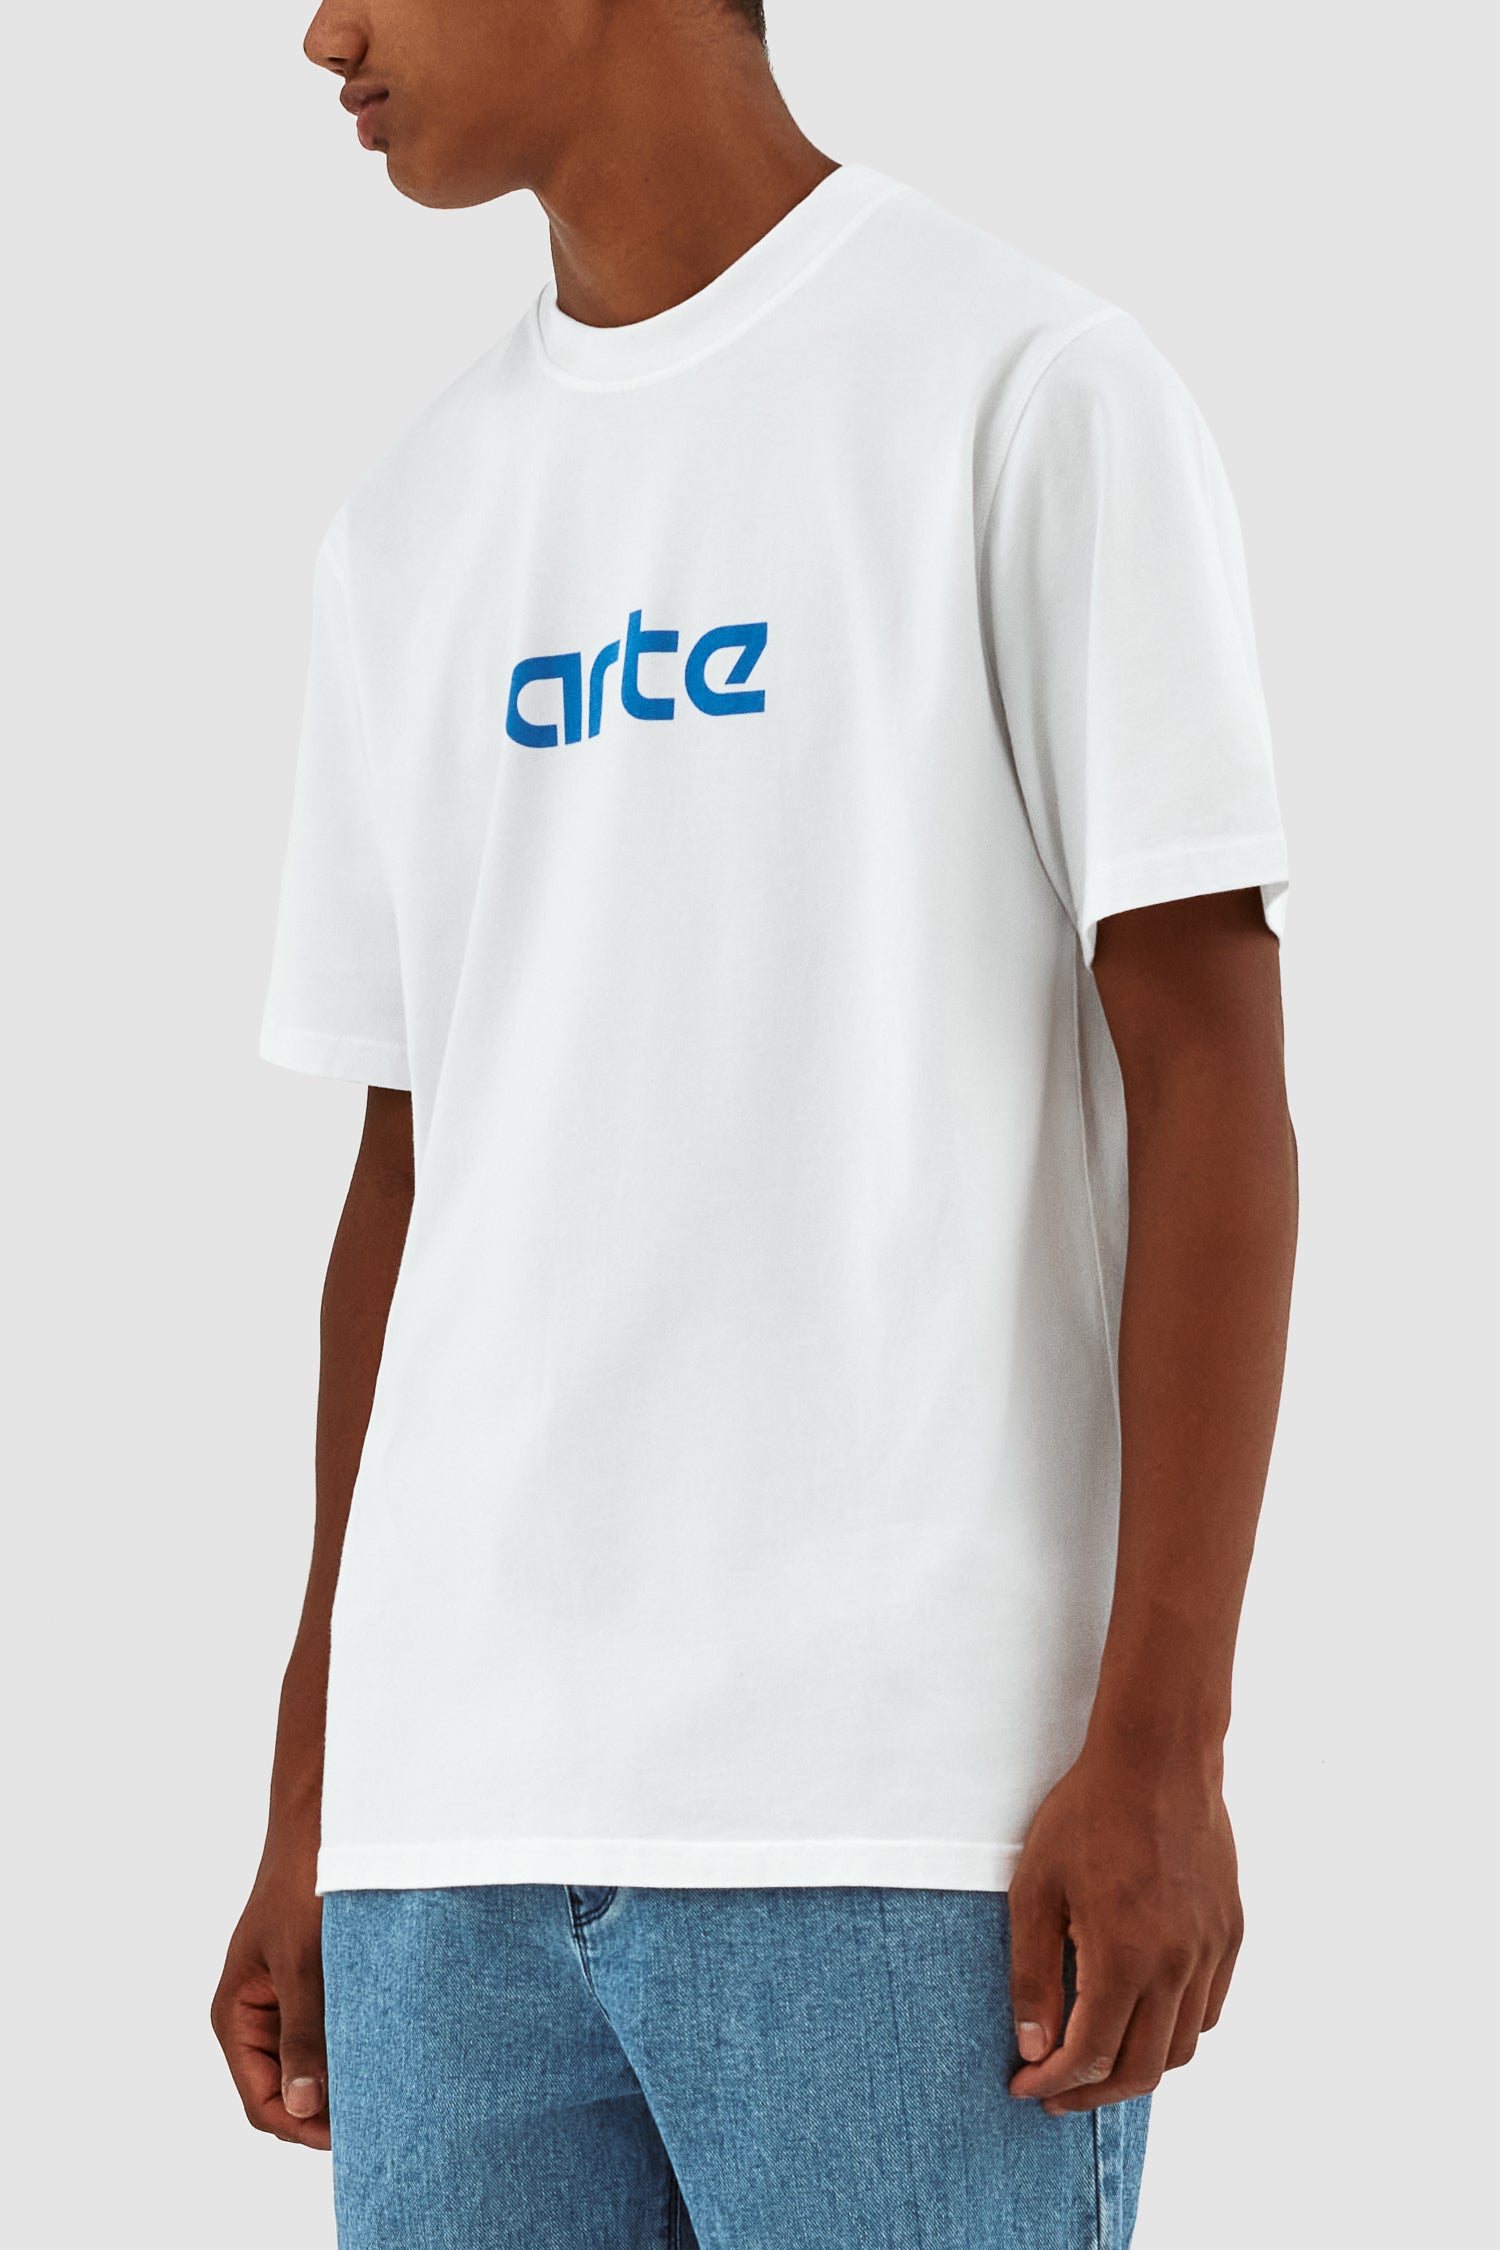 Teo Arte T-shirt - Blanc